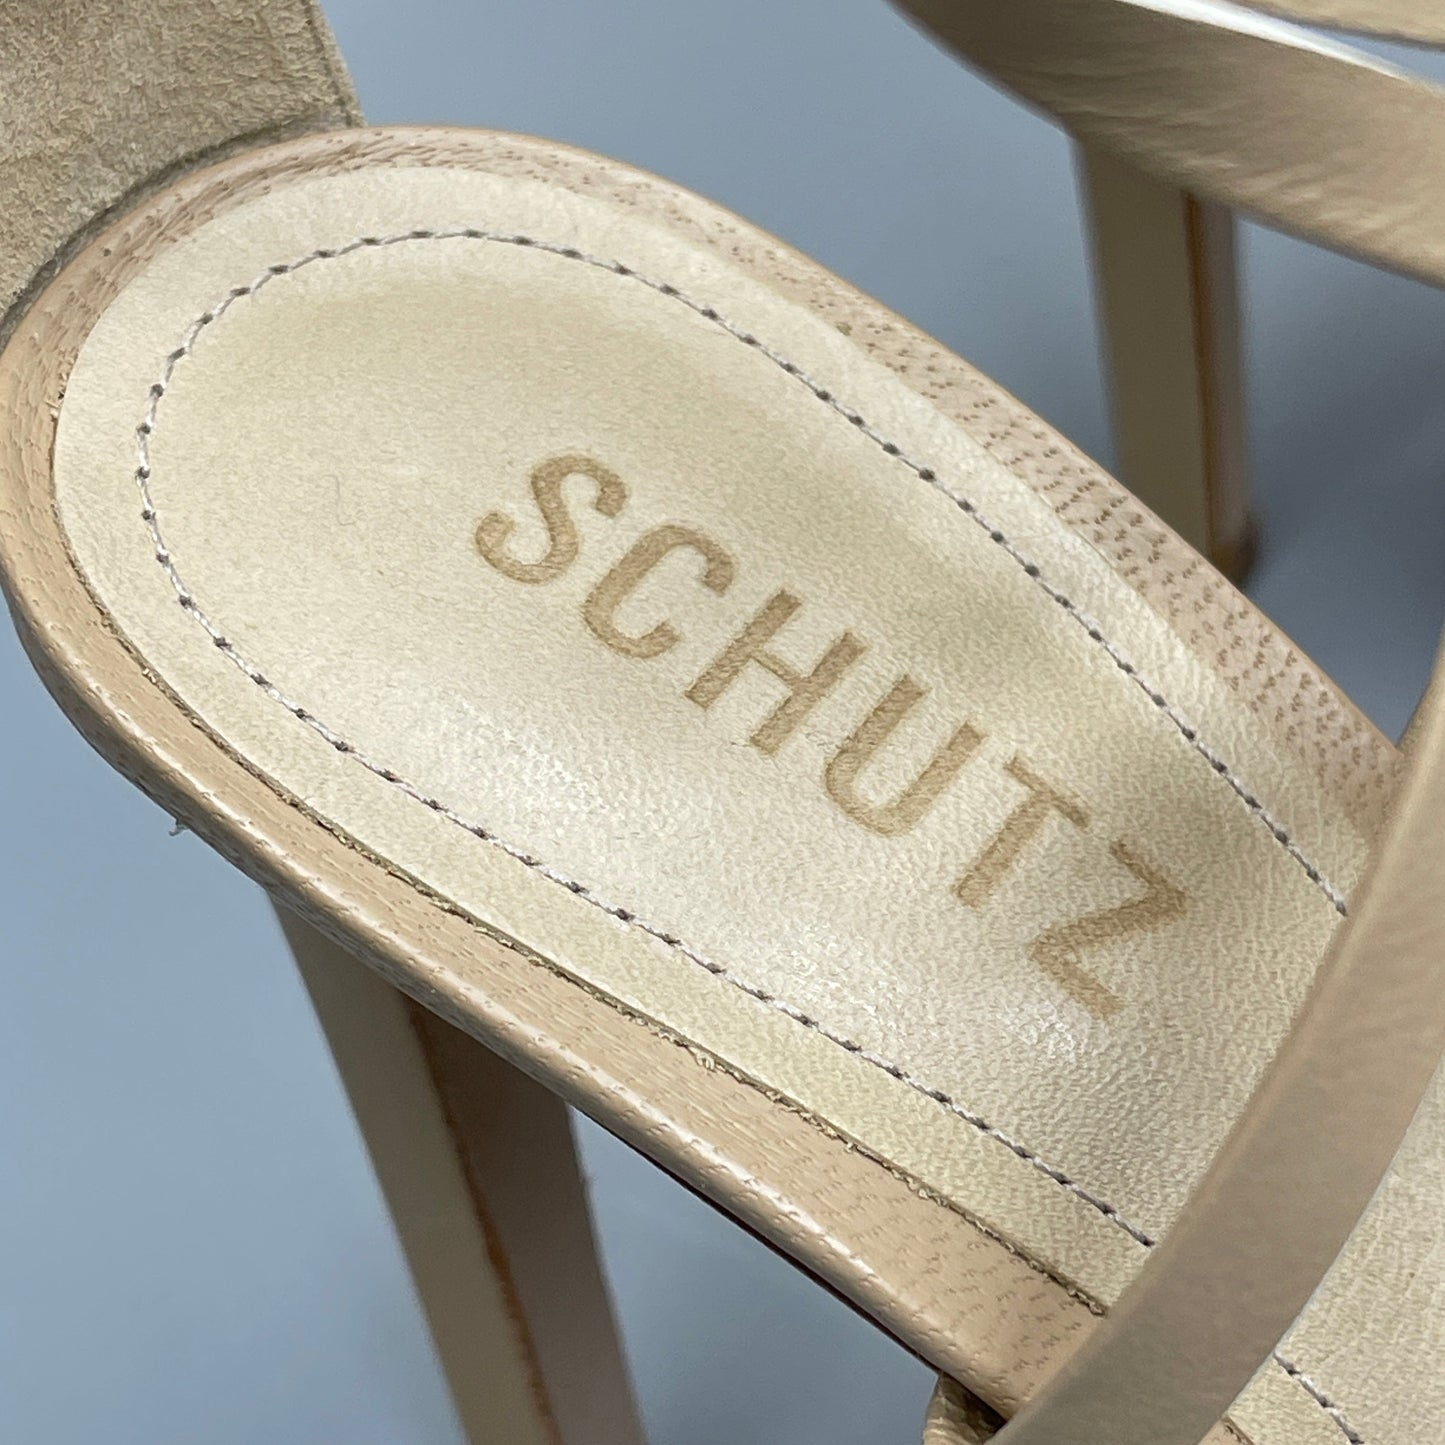 SCHUTZ Bryce Ankle Tie Women's Leather High Heel Strappy Sandal Light Nude Sz 7.5B (New)